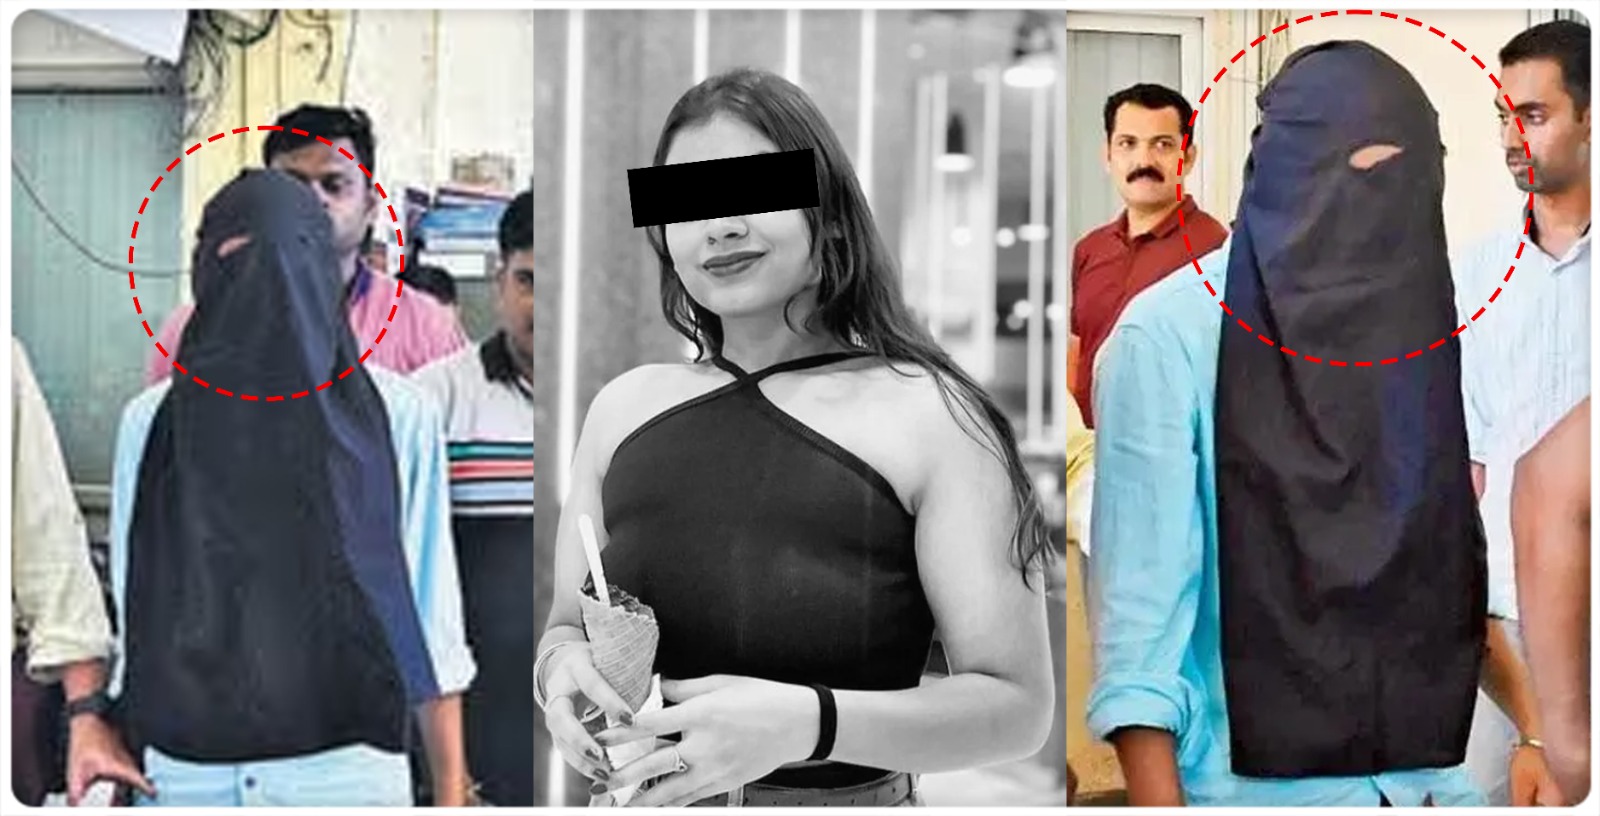 man-arrested-for-mumbai-air-hostess-murder-case-found-dead-in-police-custody